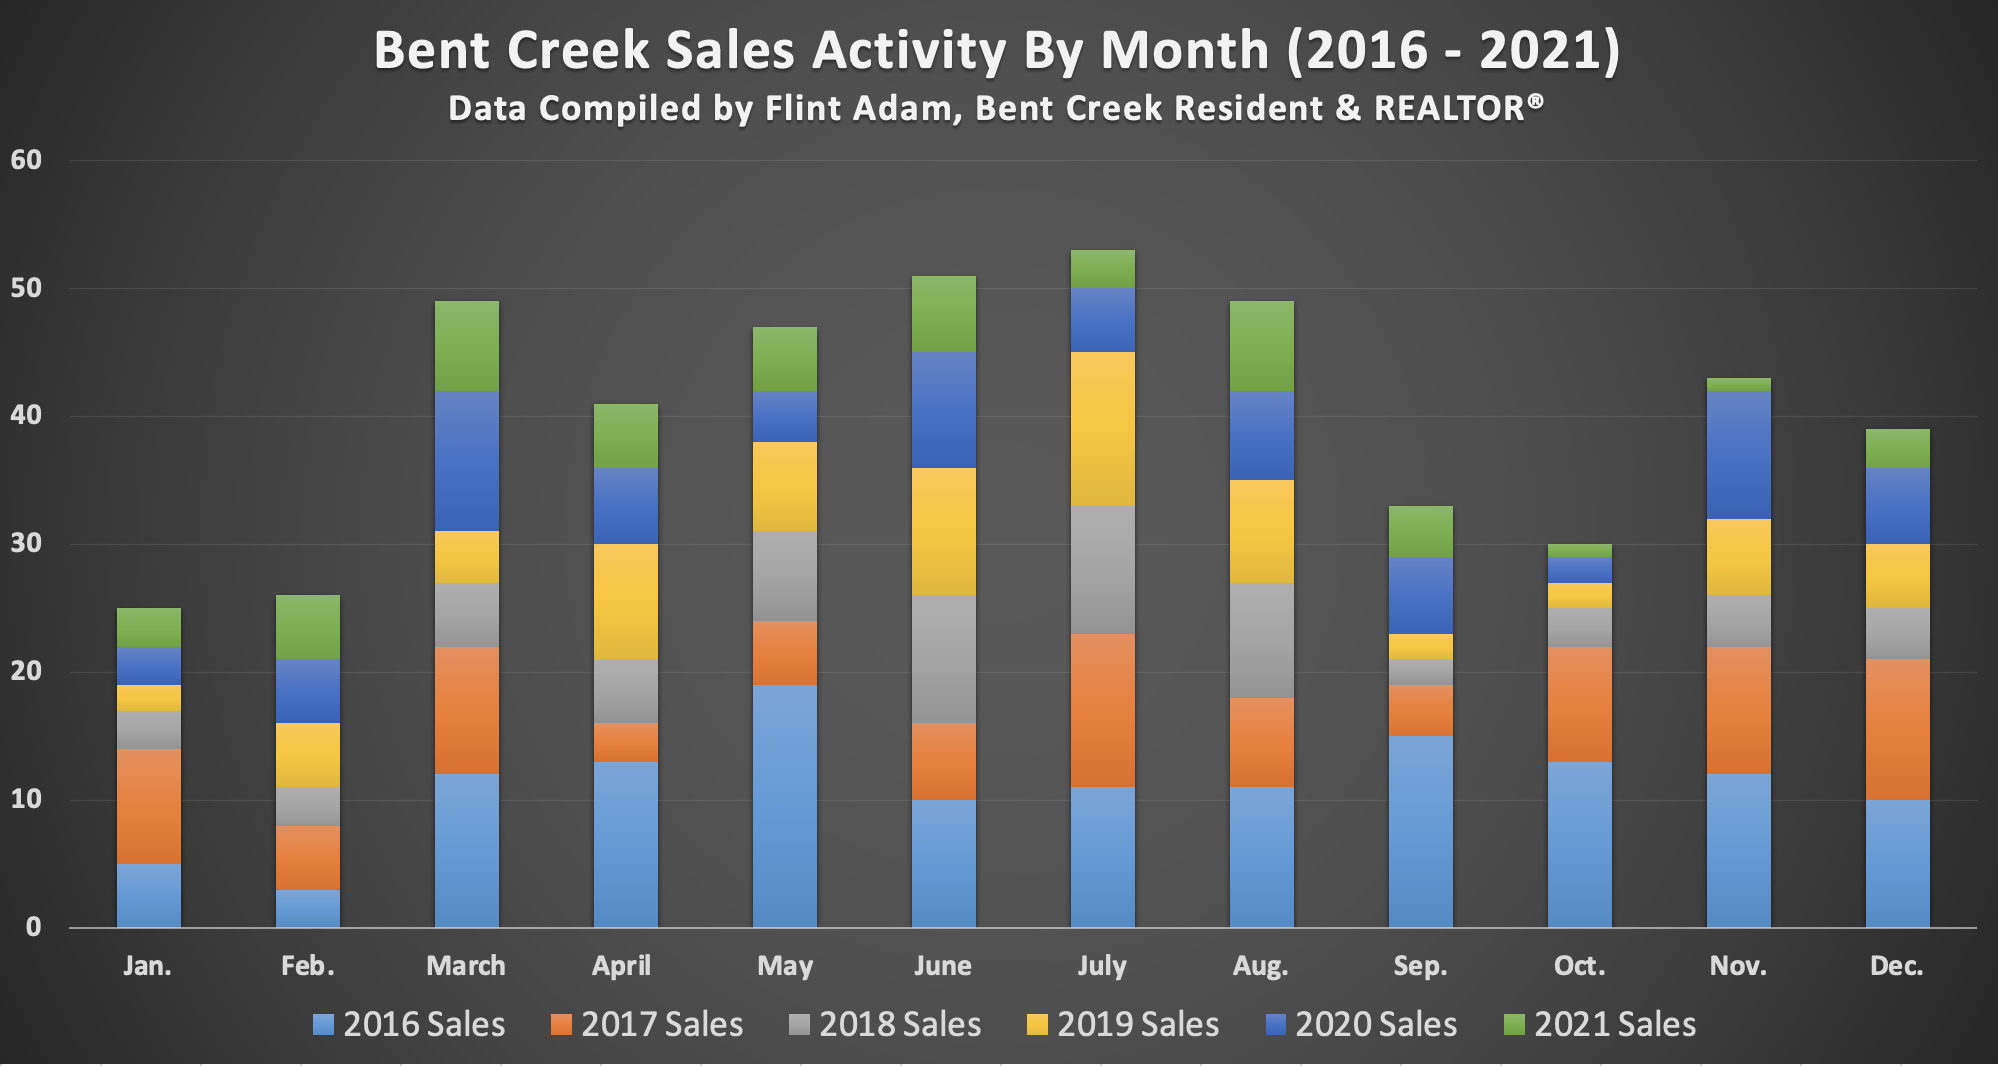 Bent Creek Home Sales Activity By Month - Through Dec 2021